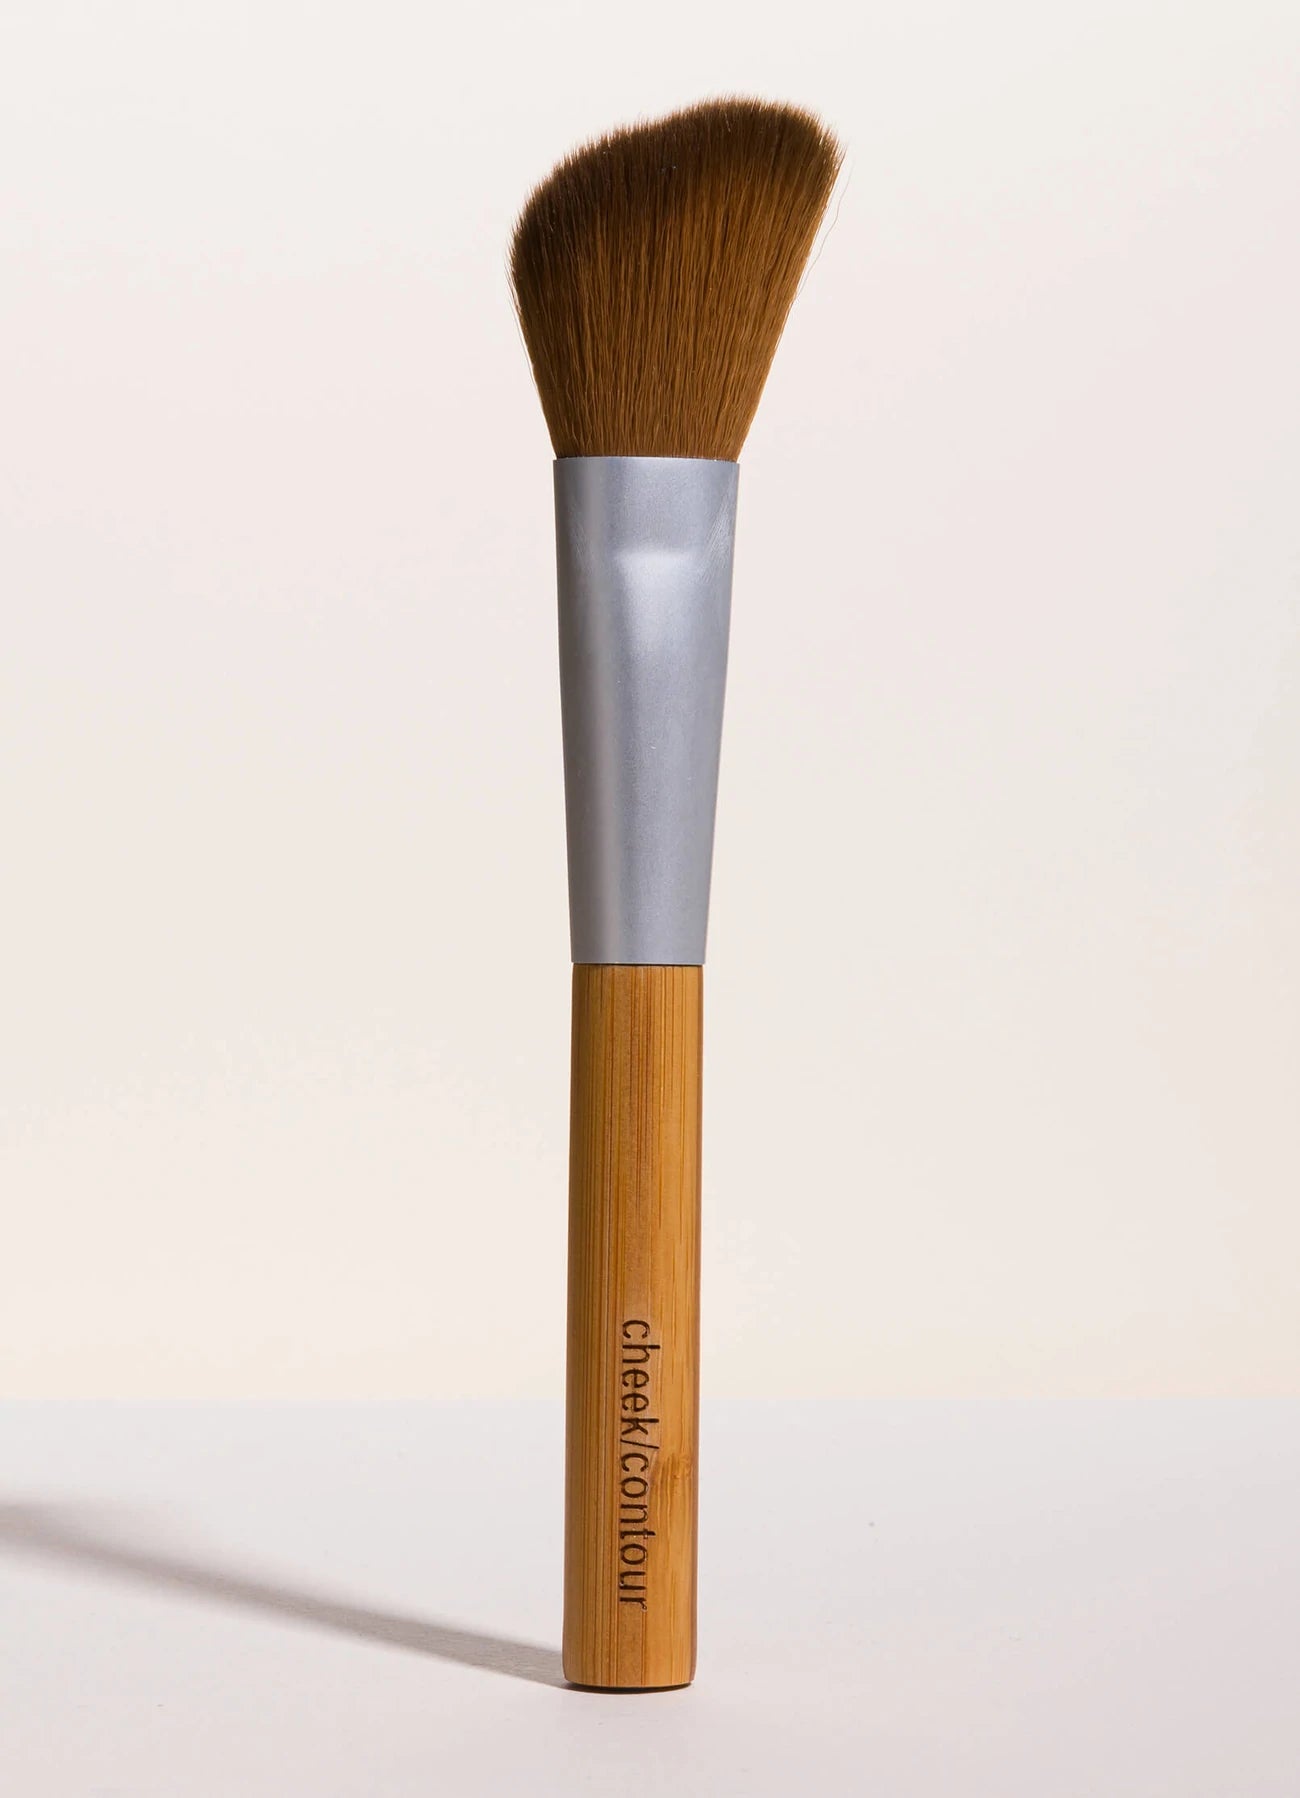 Elate Cosmetics Cheek/Contour Brush - Radiance Clean Beauty